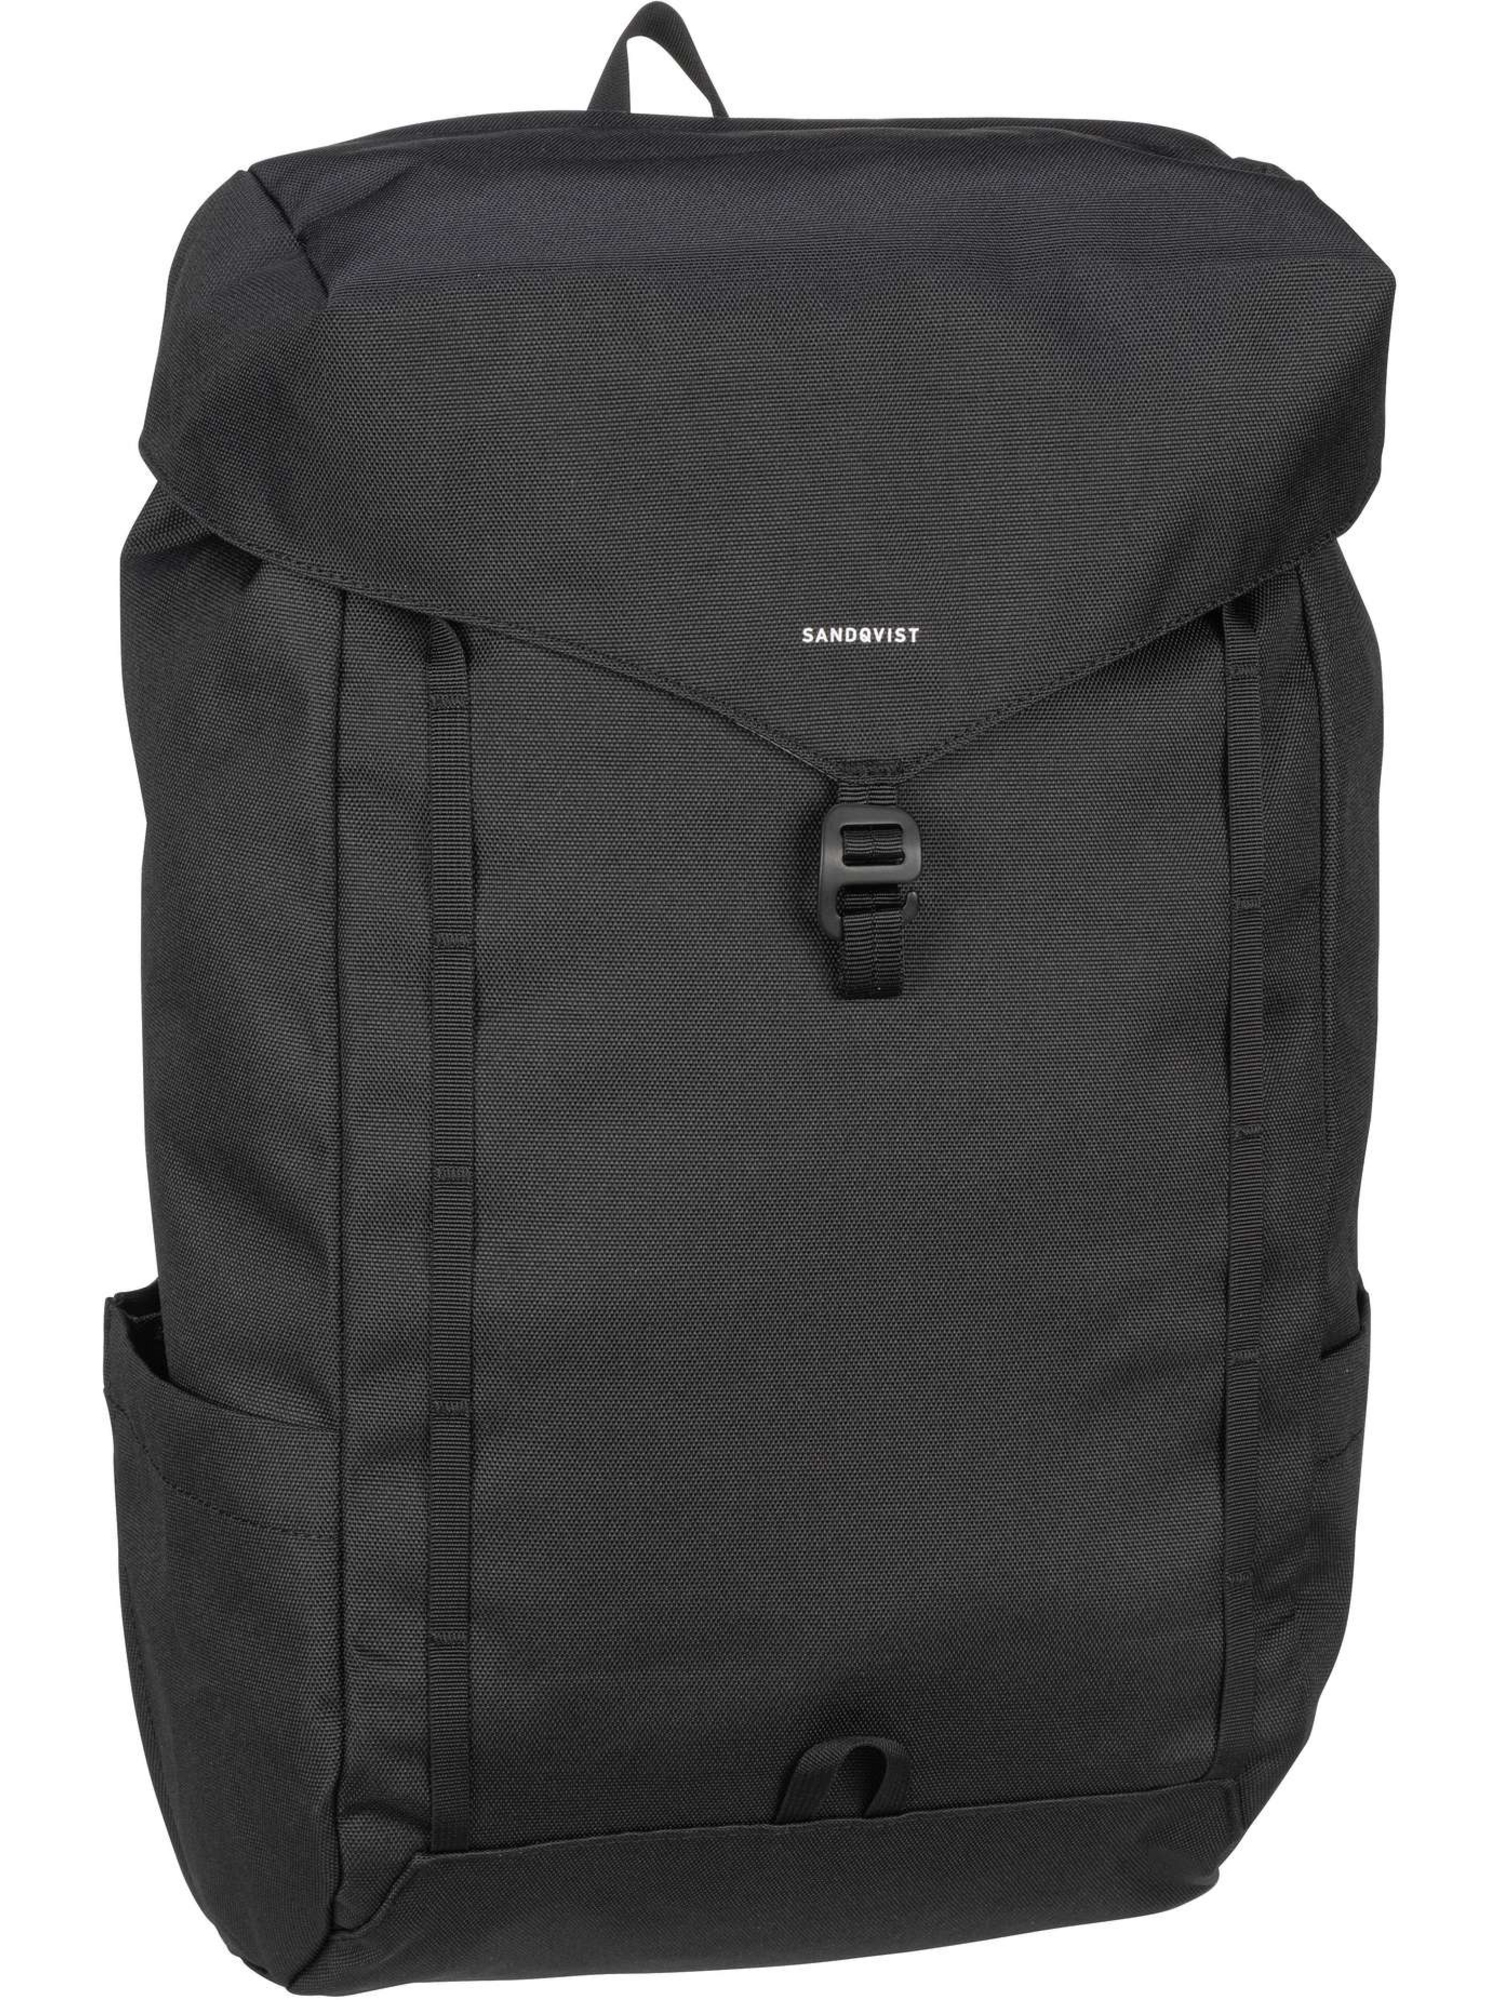 Рюкзак SANDQVIST/Backpack Walter Backpack, черный рюкзак walter travel sandqvist